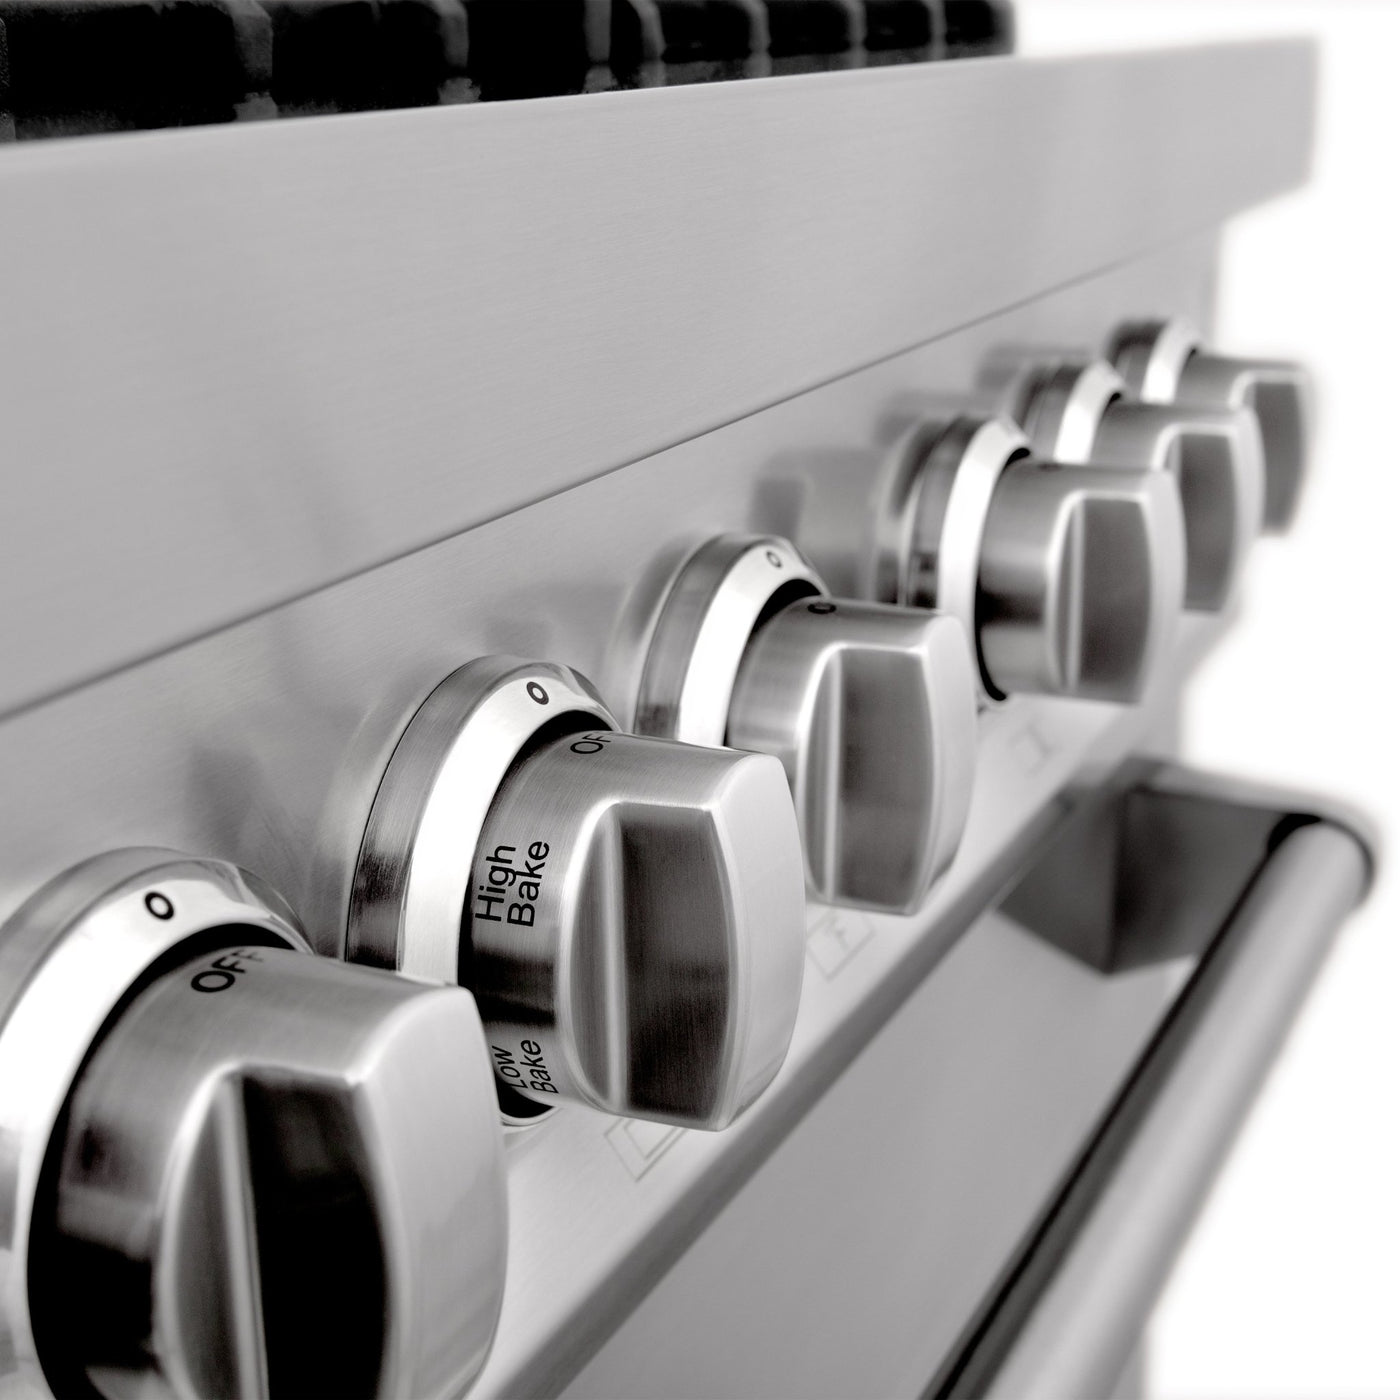 ZLINE Kitchen and Bath, ZLINE 48" Professional Dual Fuel Range in Stainless Steel, RA48,